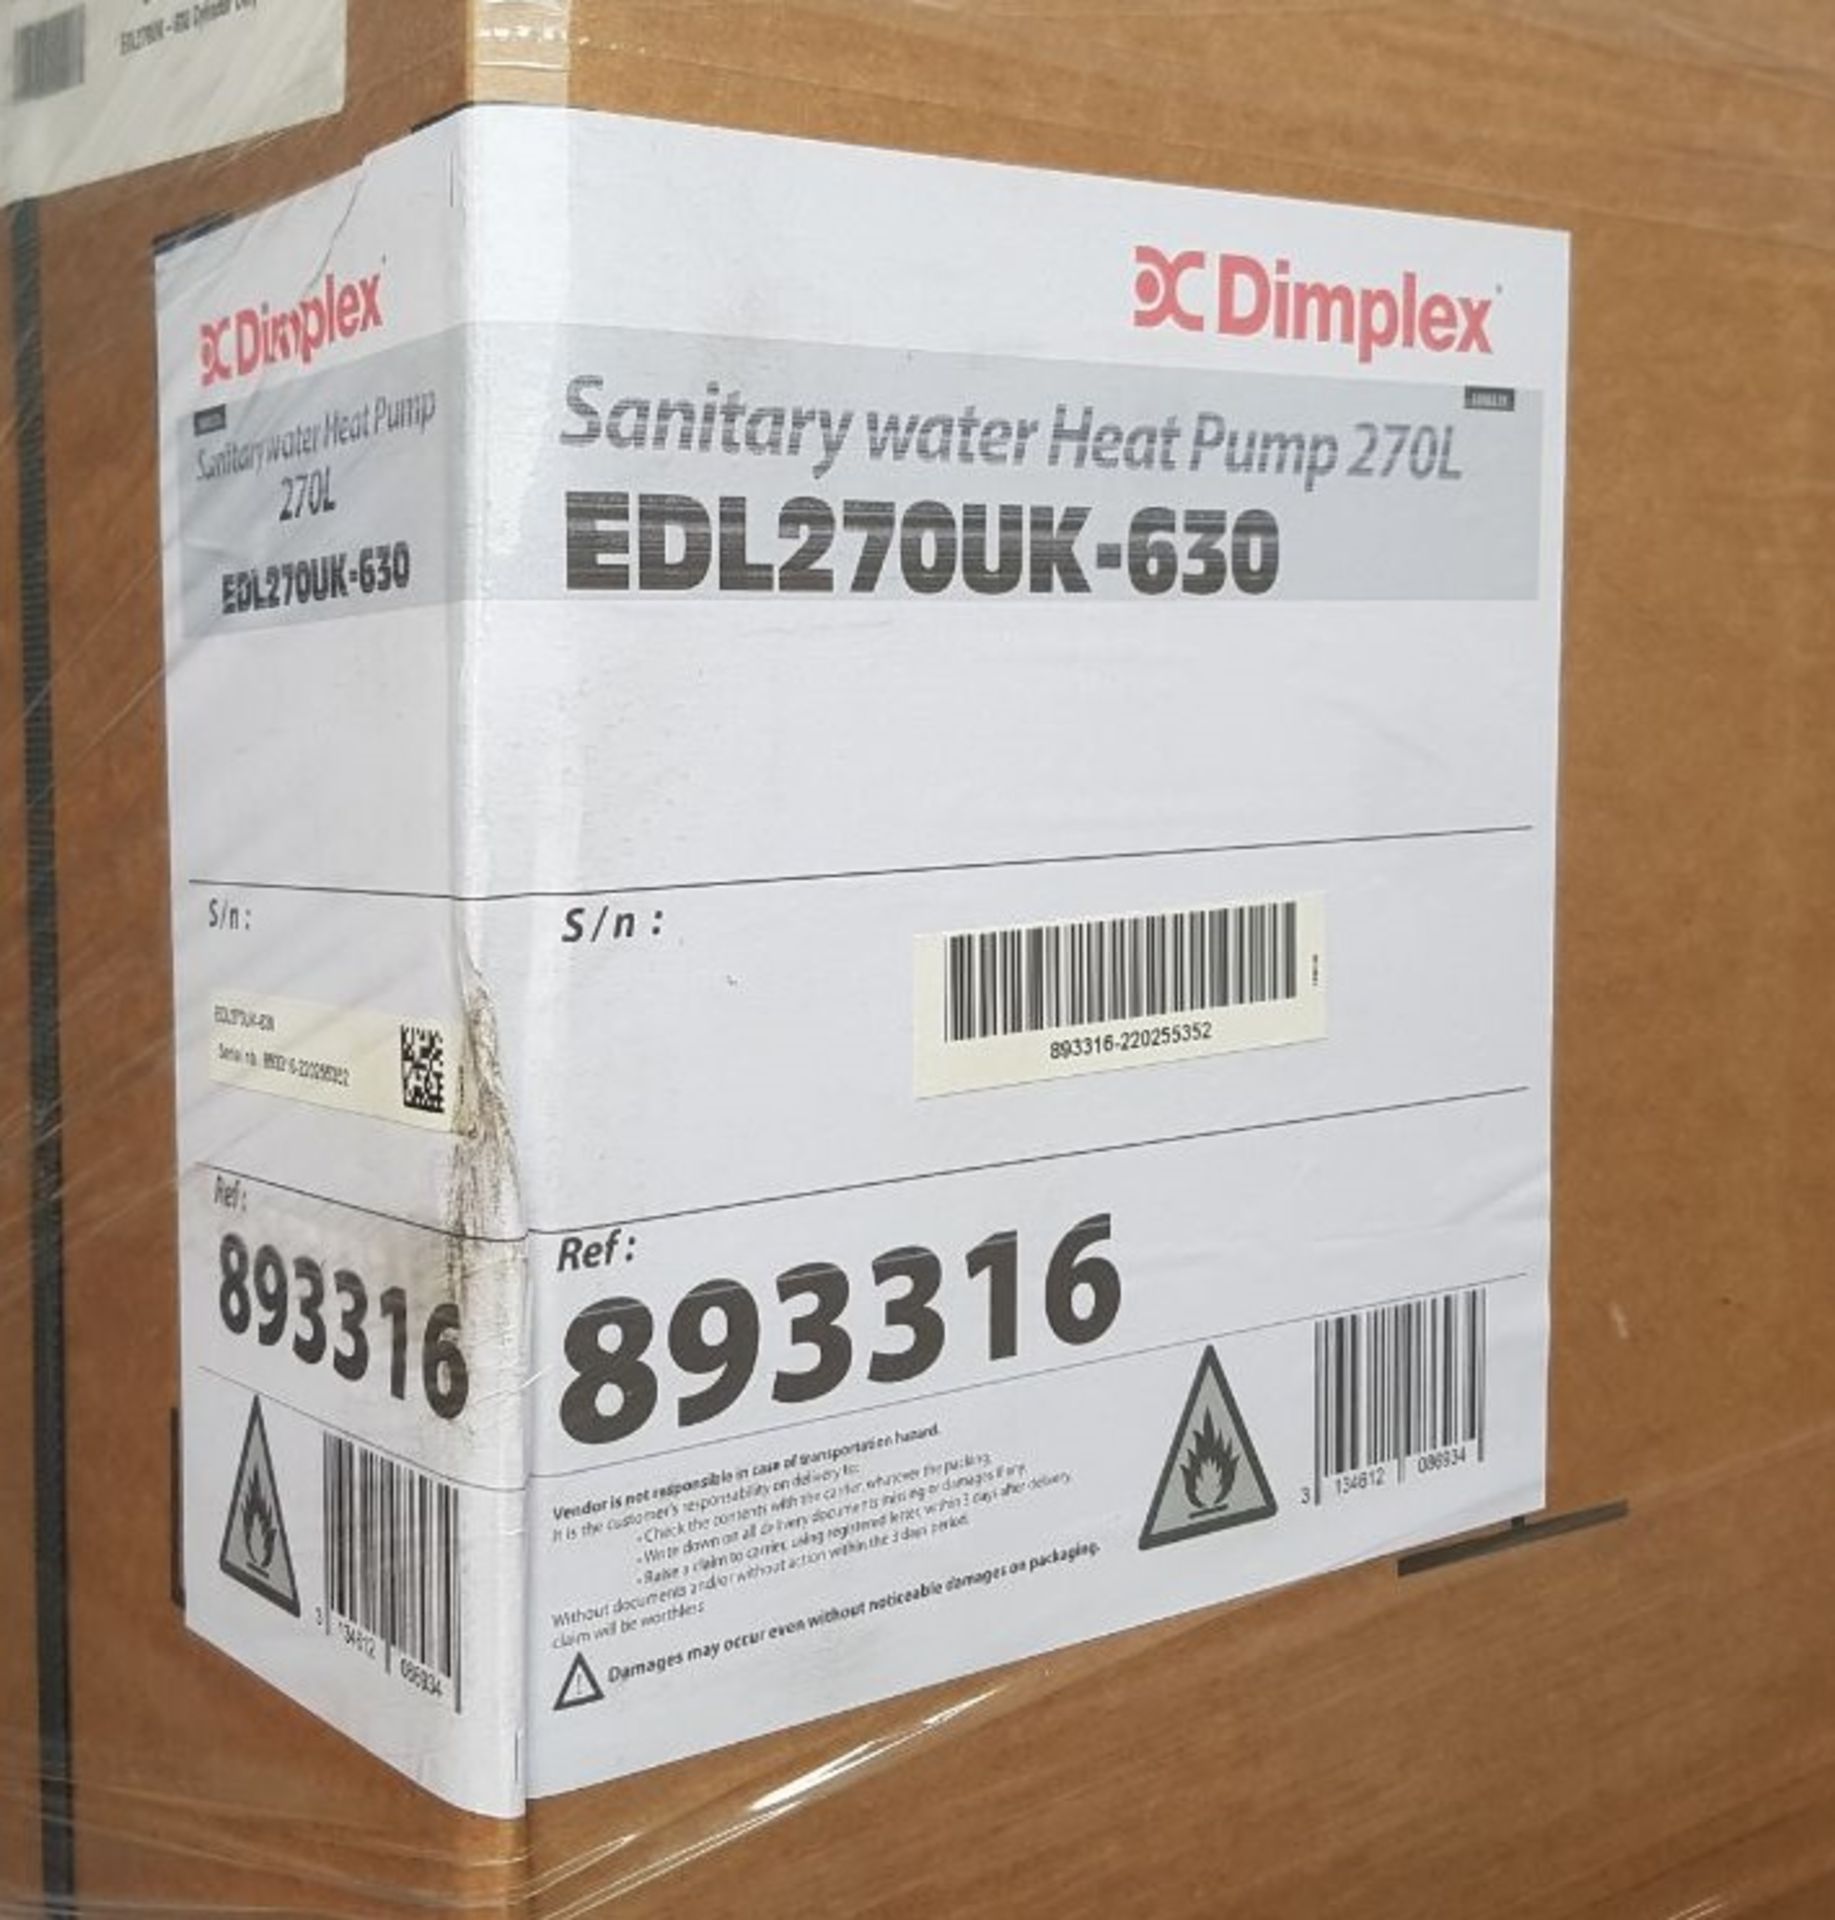 Dimplex EDL270UK-630 - Image 3 of 4